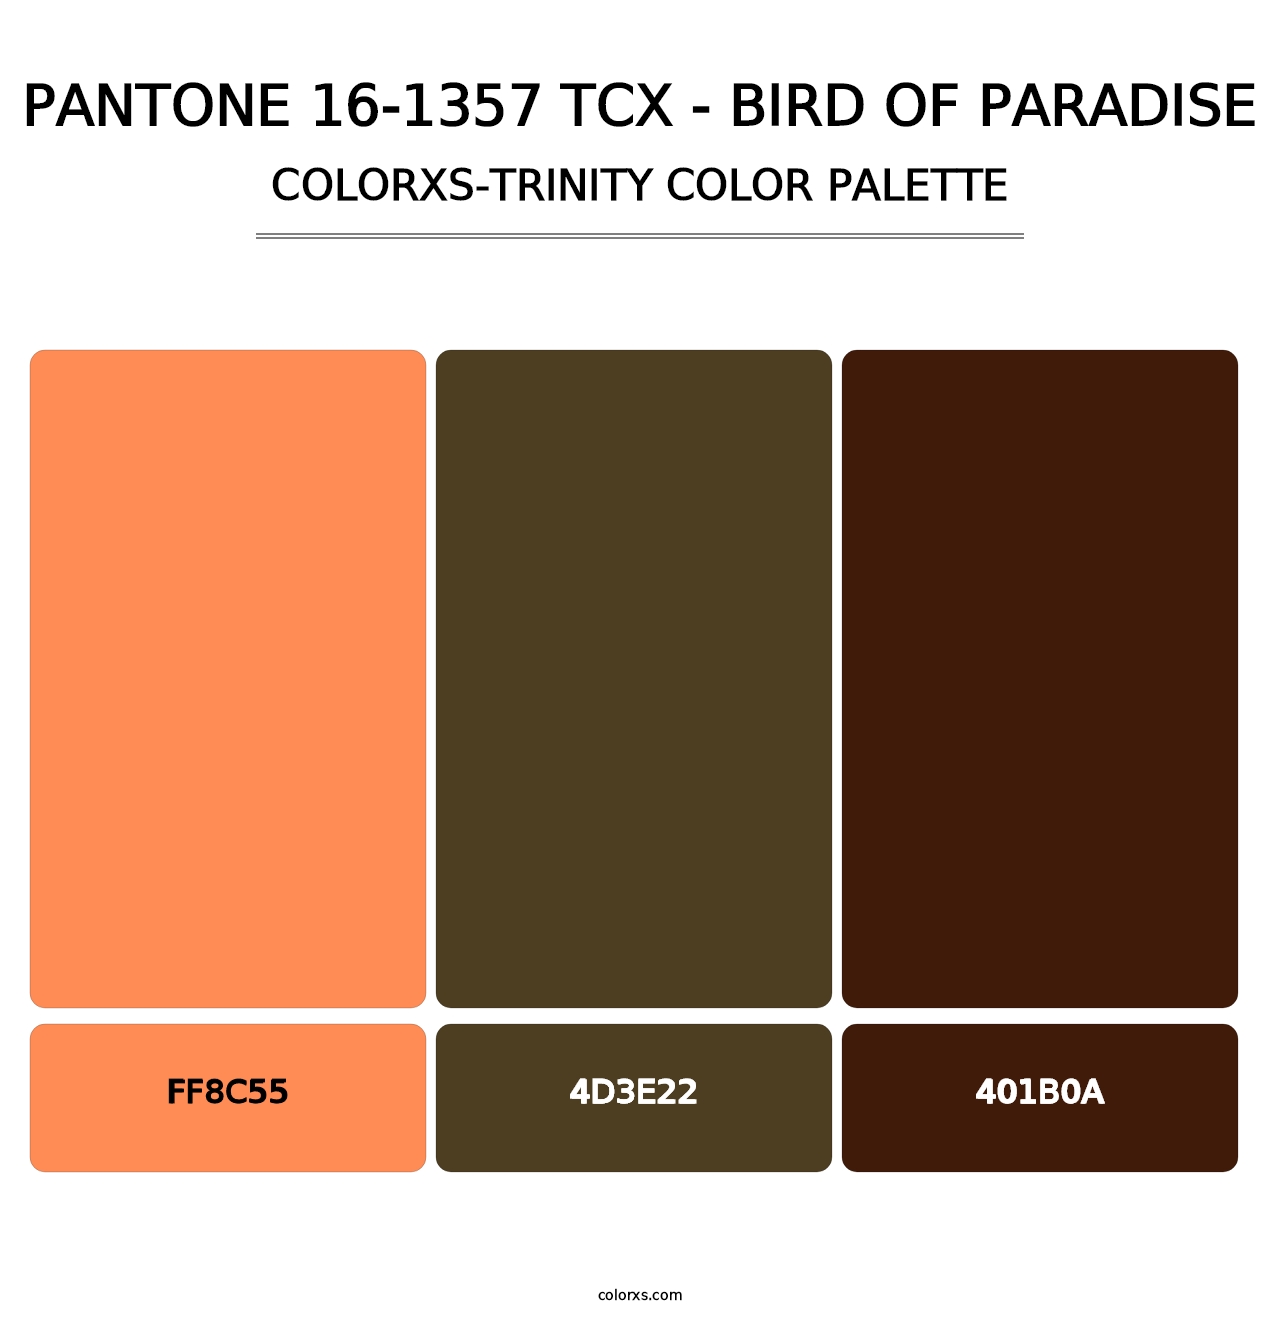 PANTONE 16-1357 TCX - Bird of Paradise - Colorxs Trinity Palette